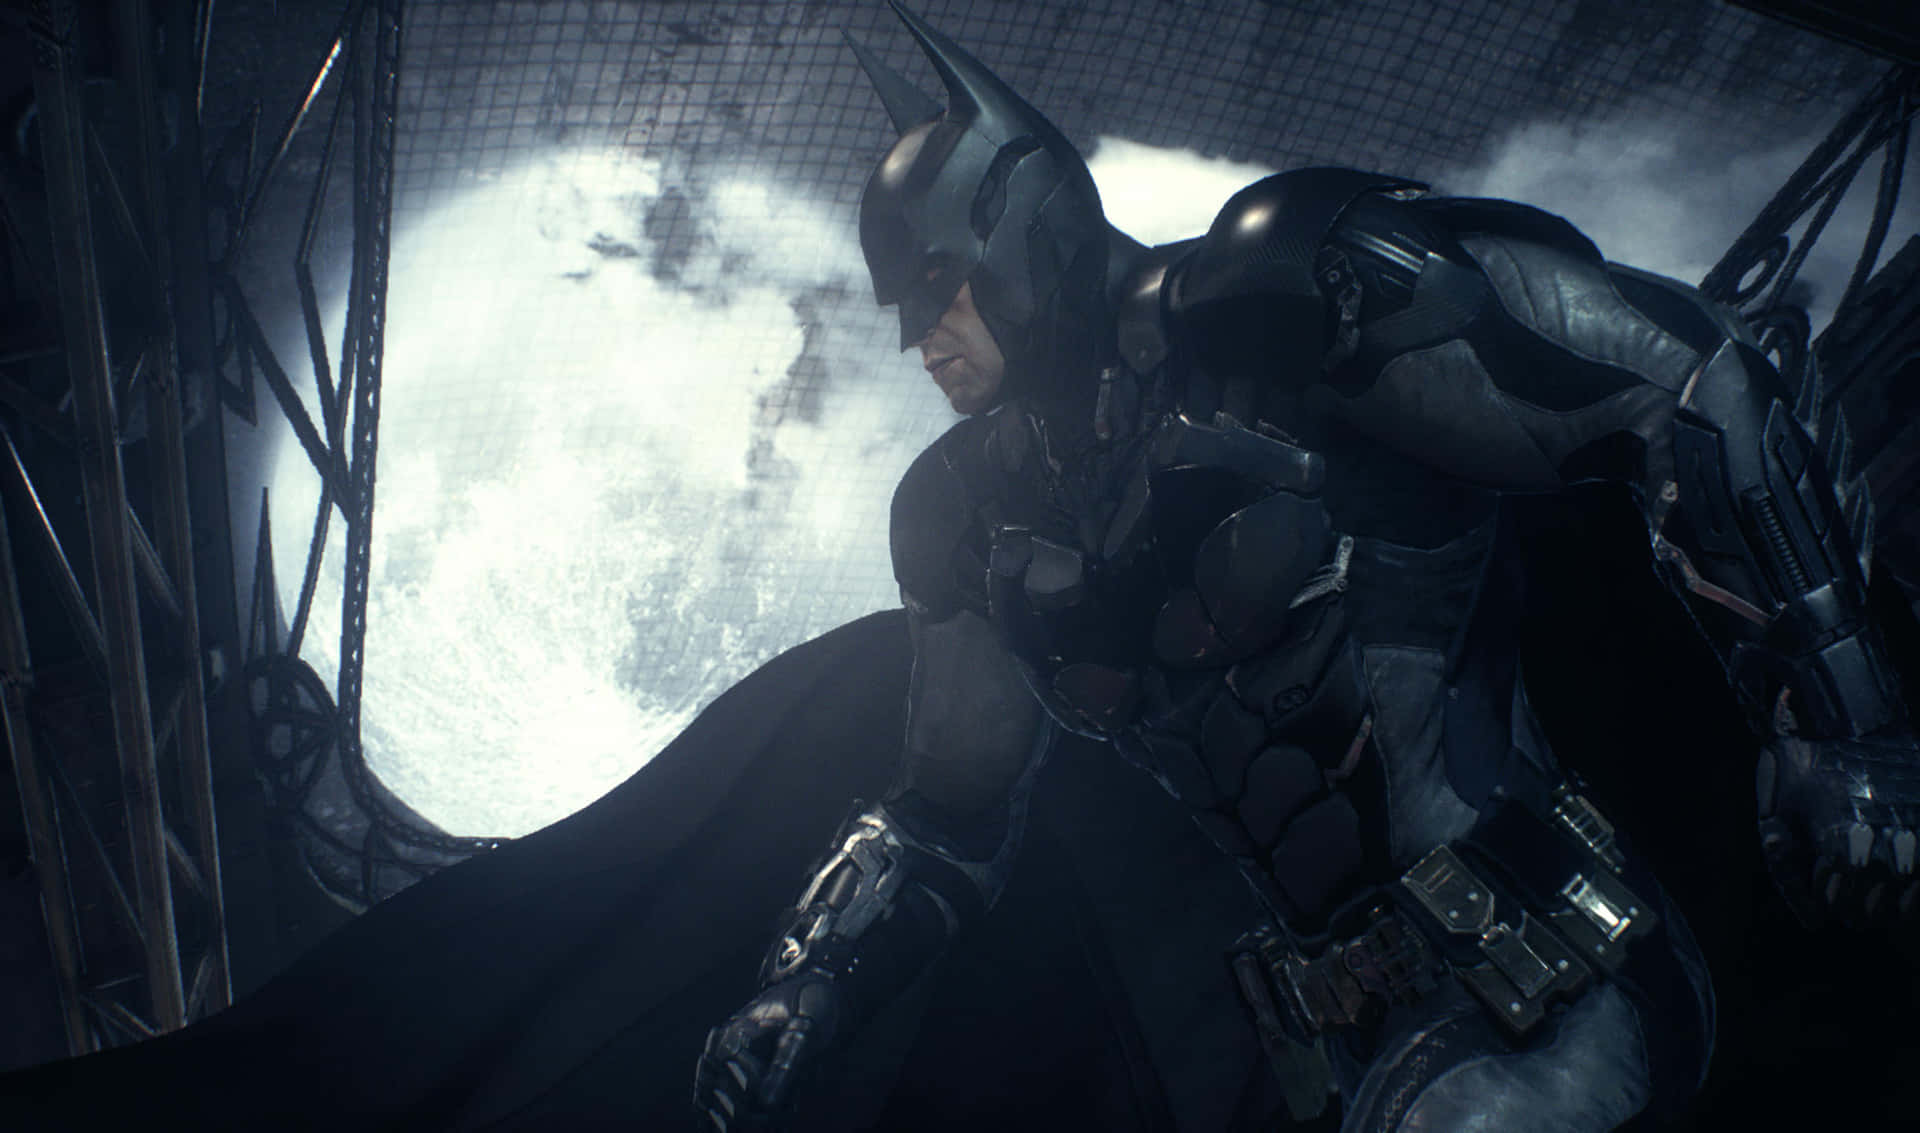 Batman faces his enemies in “Arkham City”